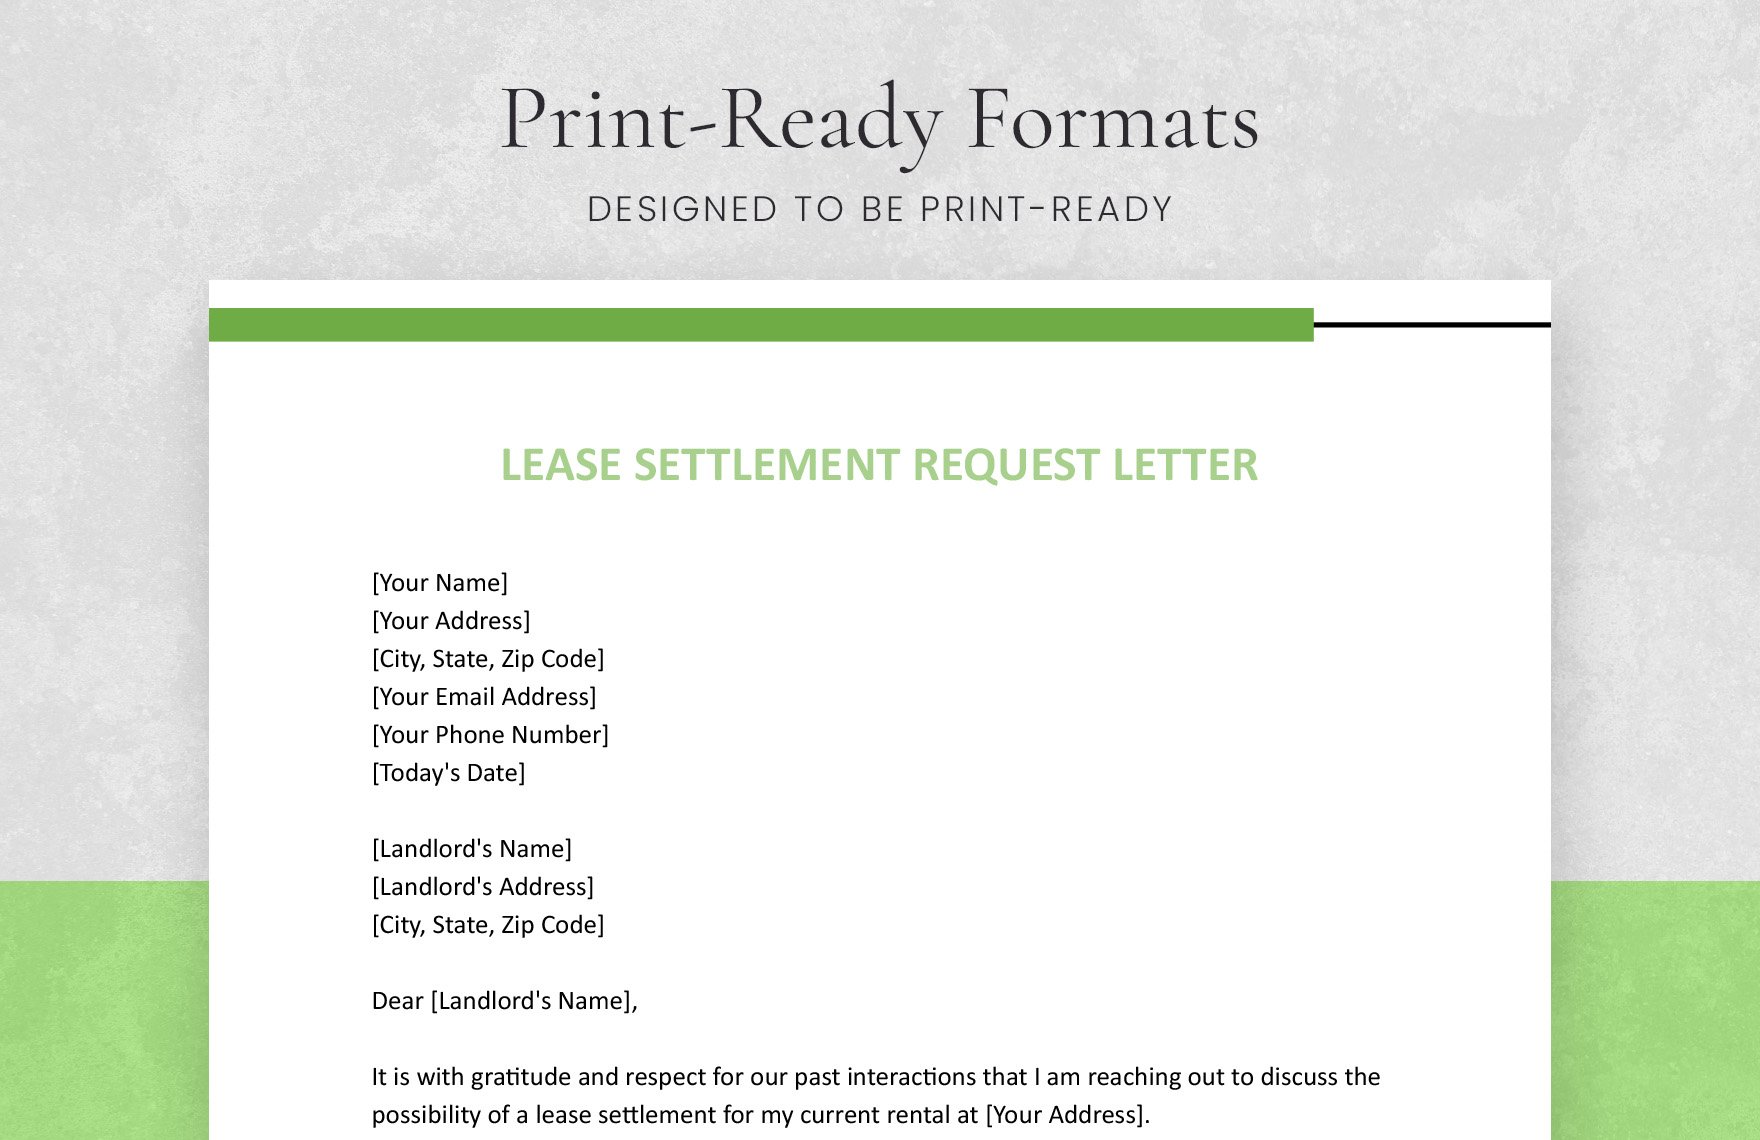 Lease Settlement Request Letter